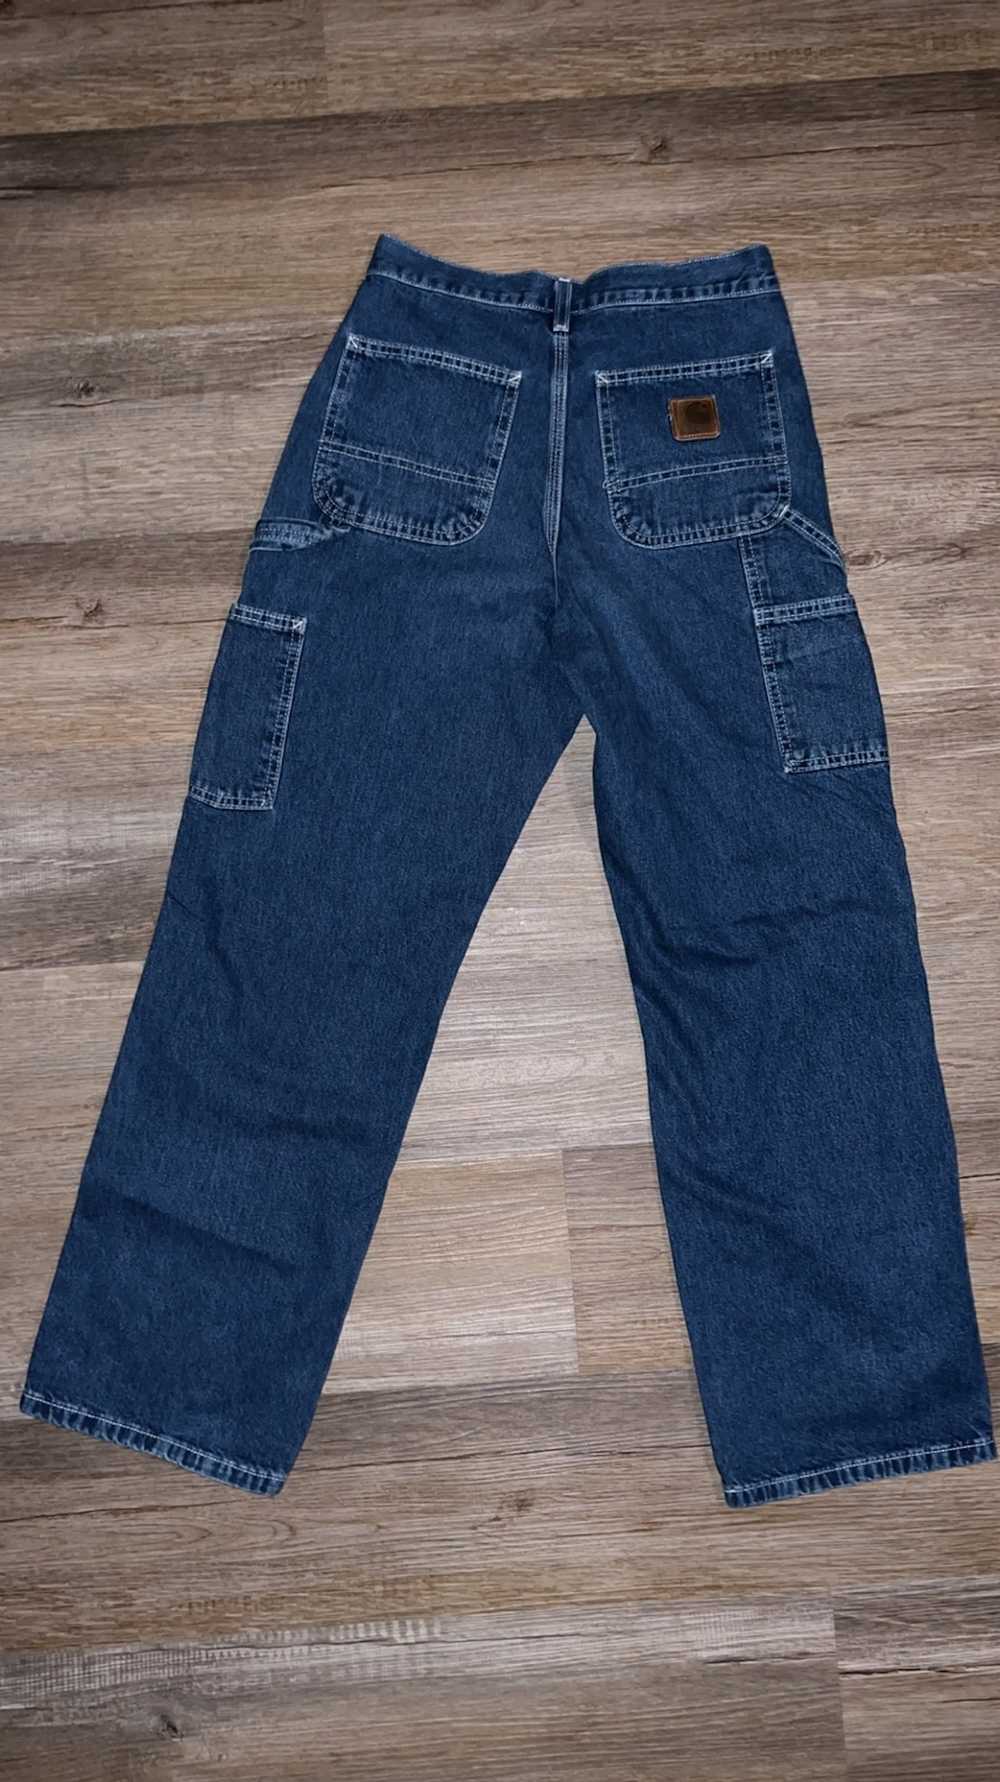 Carhartt Carhartt jeans 28x30 perfect - image 4